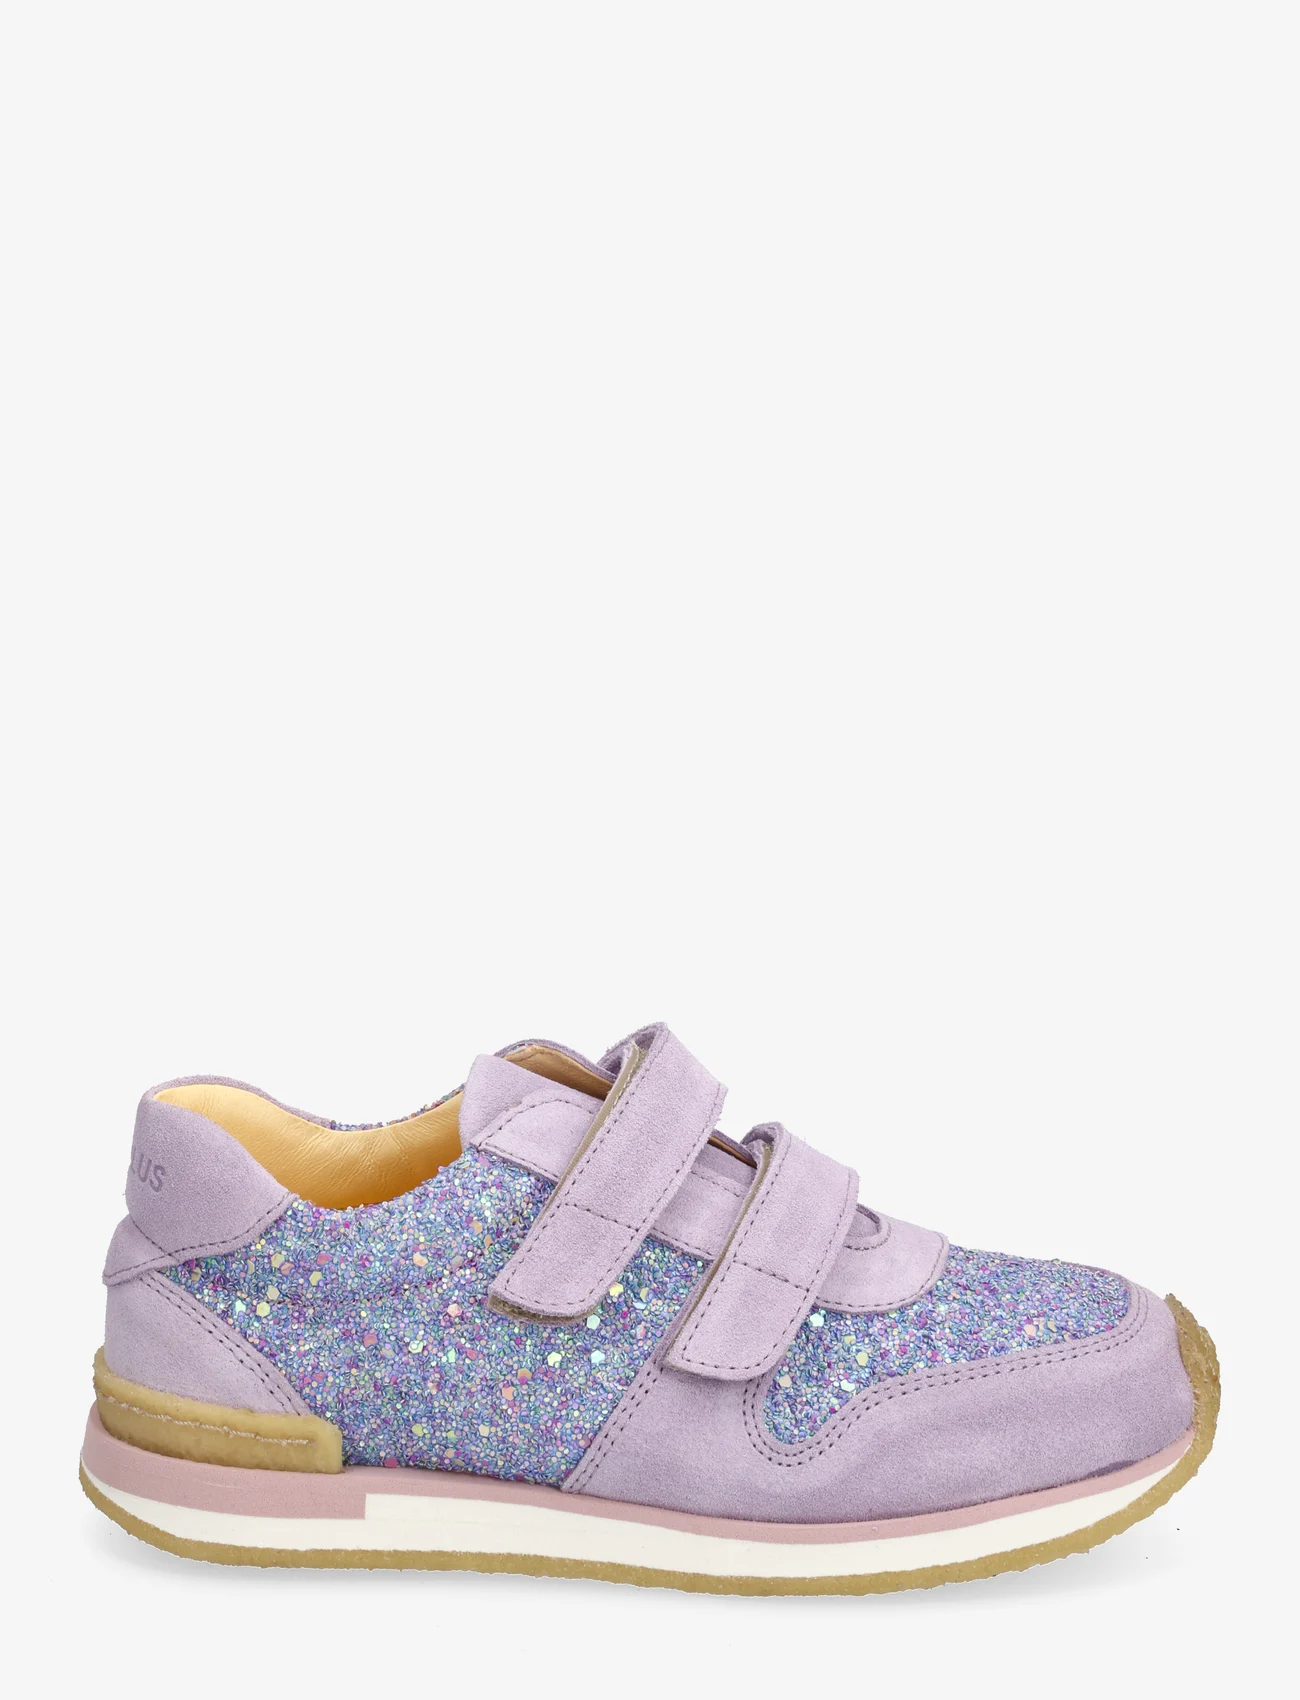 ANGULUS - Shoes - flat - with velcro - gode sommertilbud - 2245/2753 lilac/confetti glitt - 1